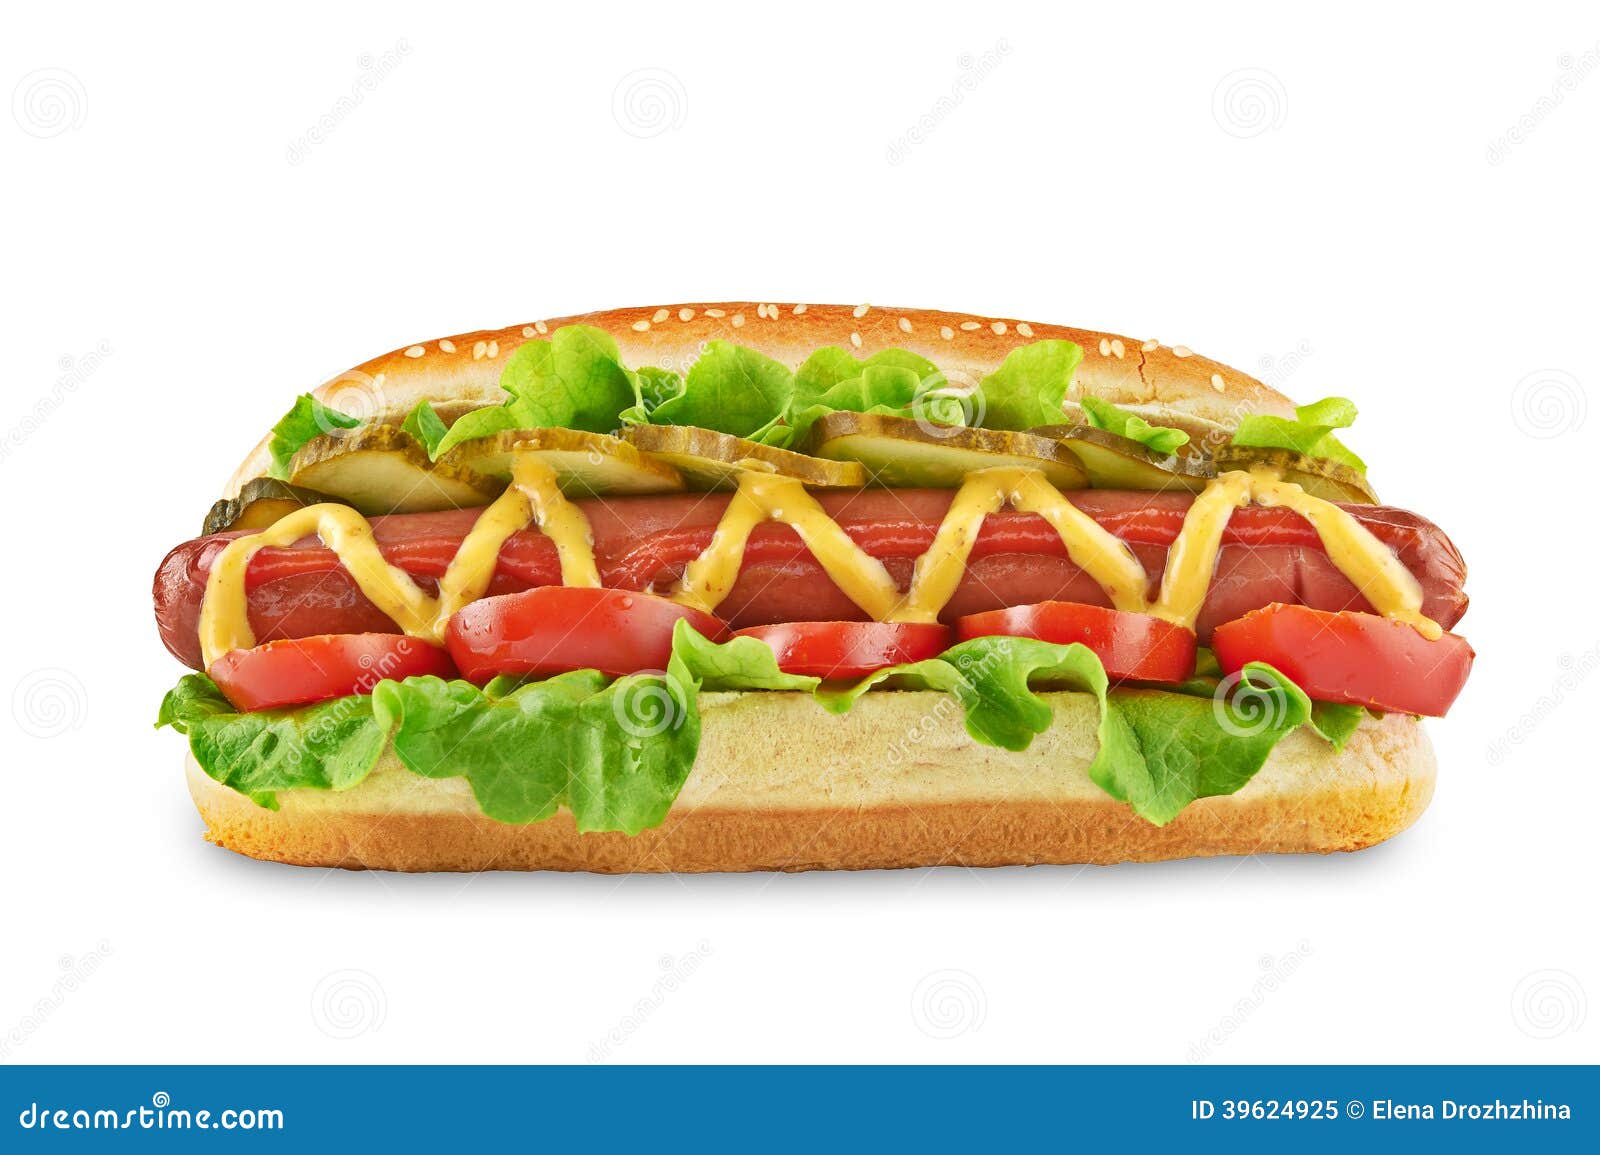 hotdog  on white background